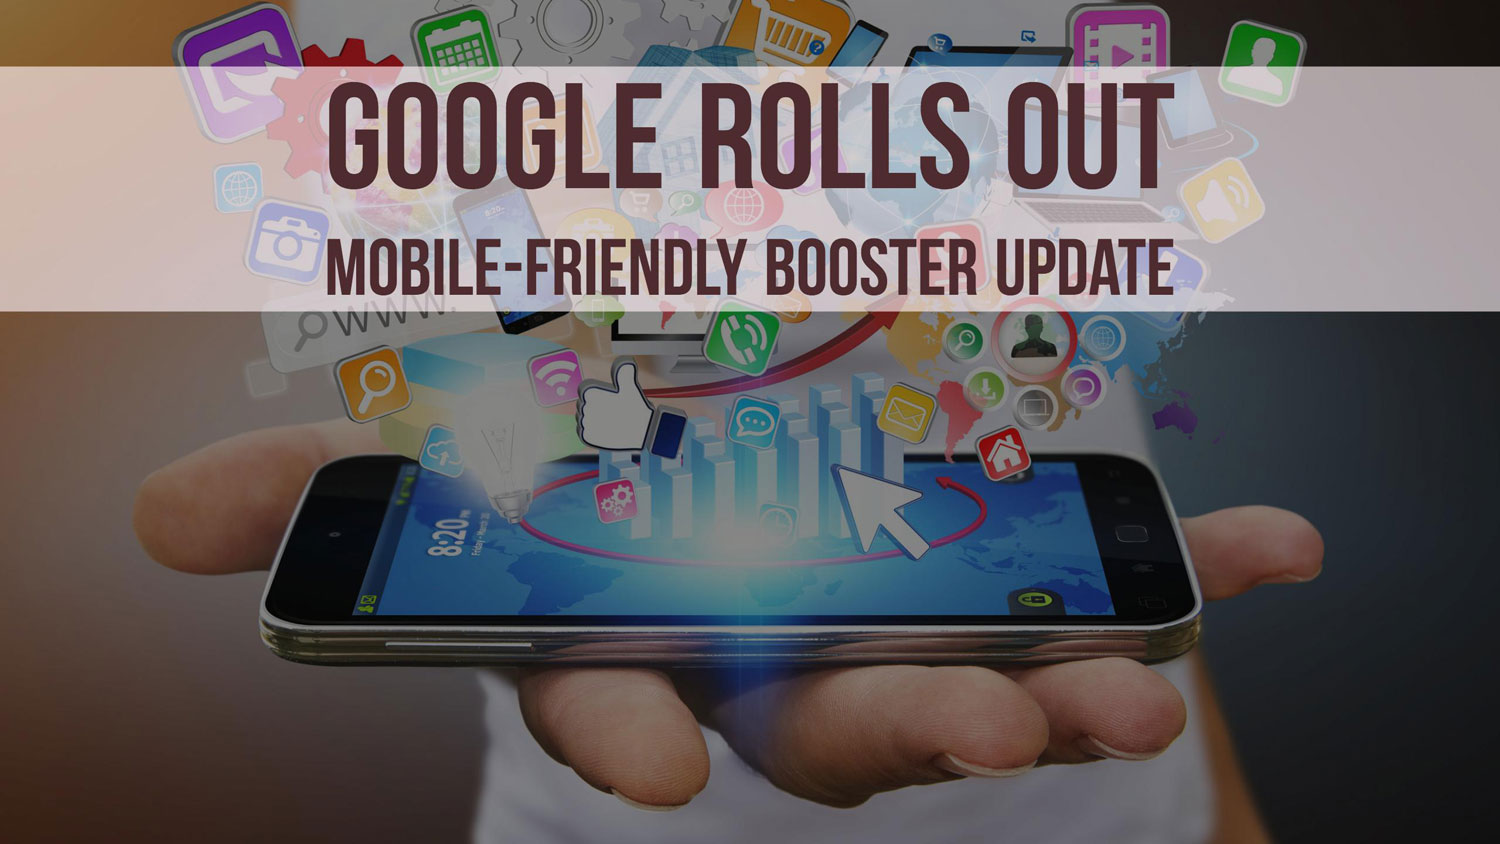 Google Mobile-Friendly Website Booster Update